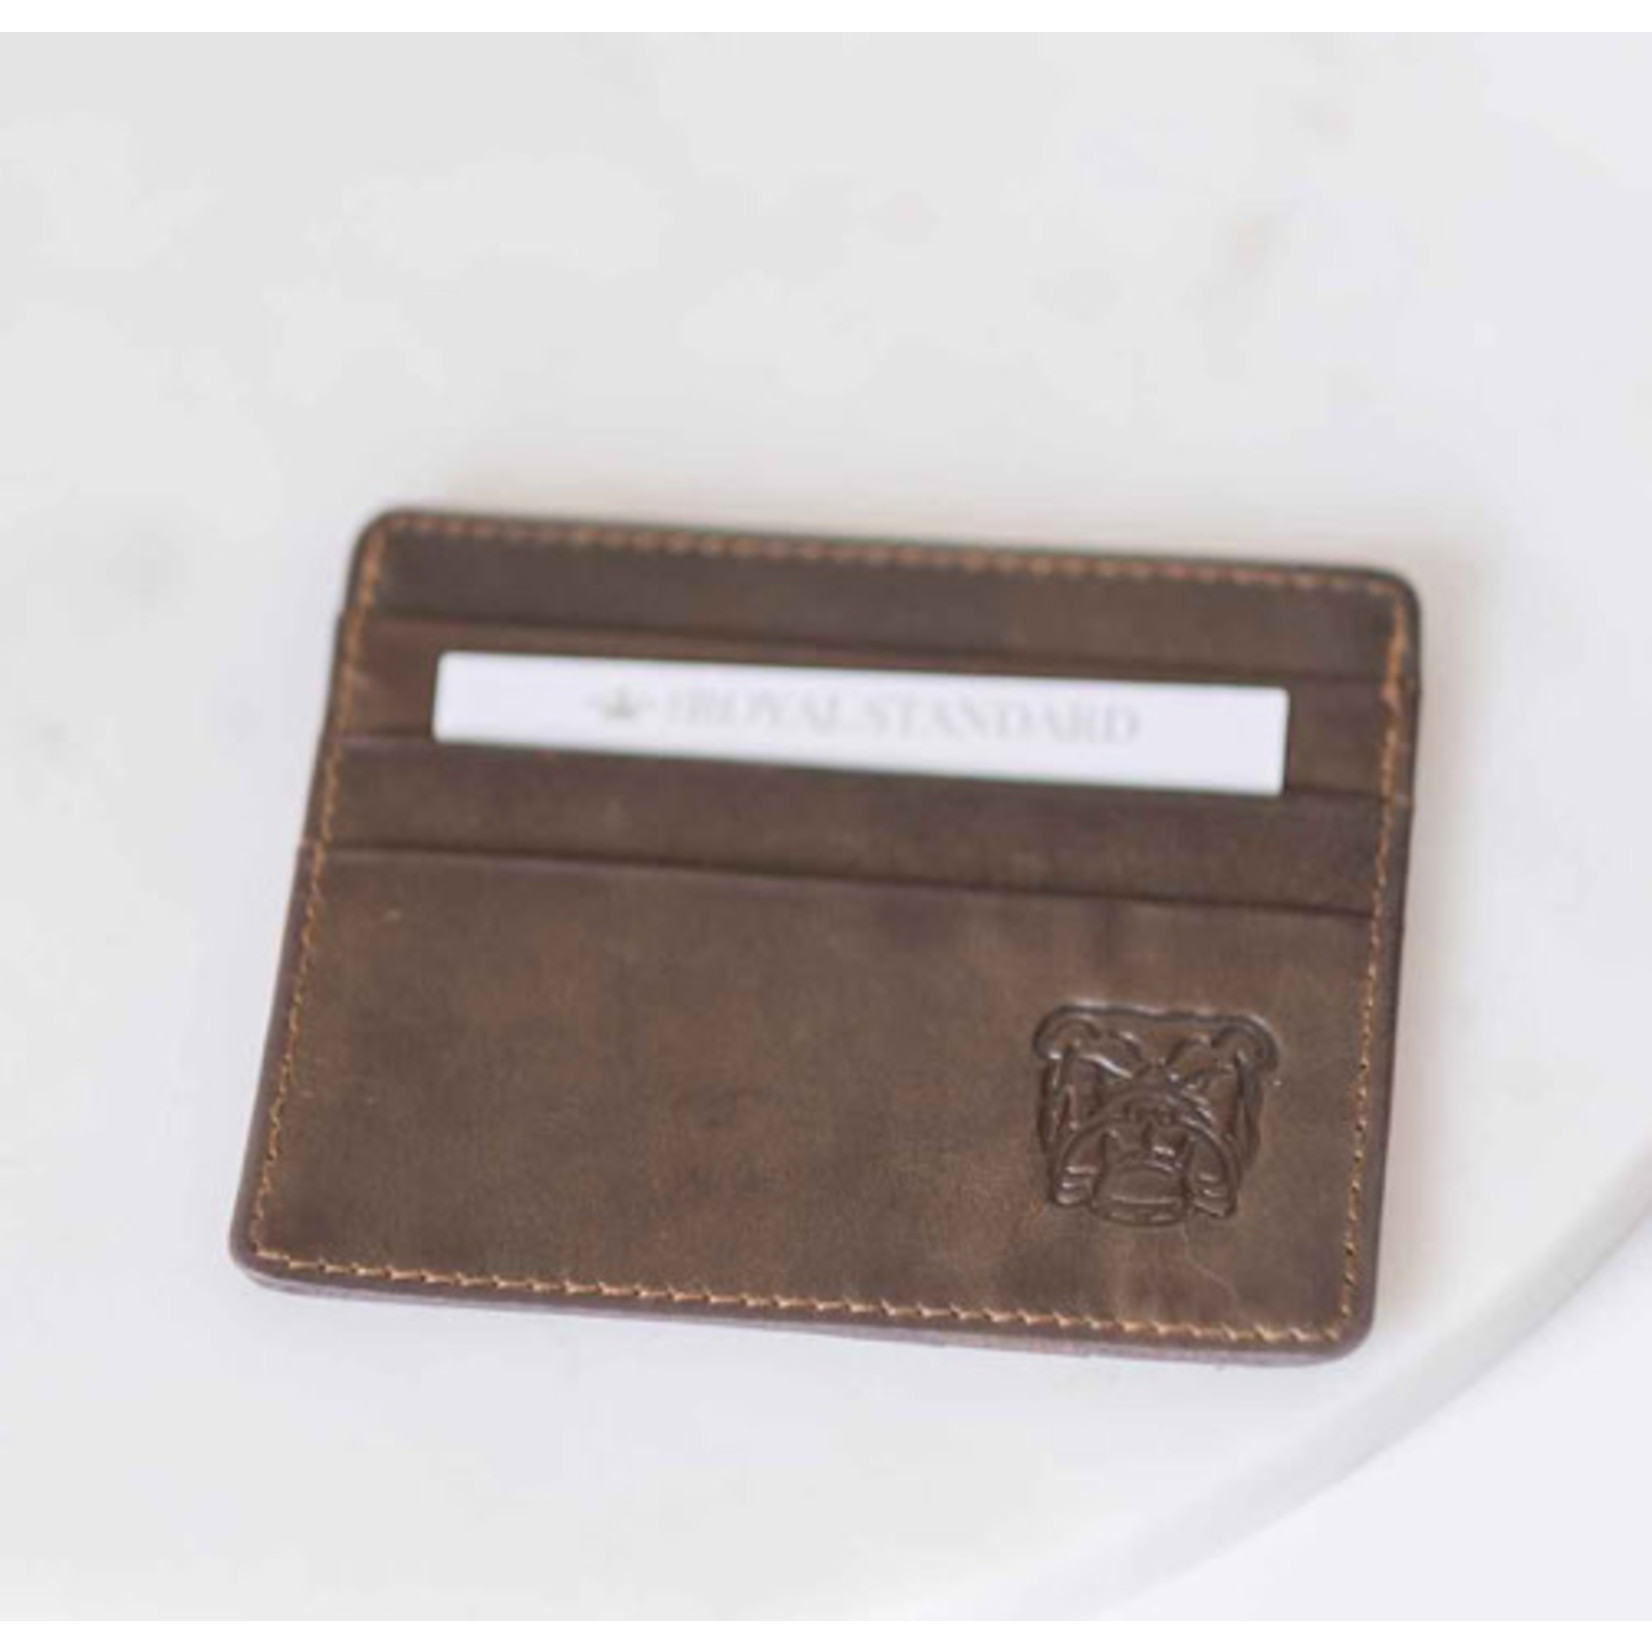 The Royal Standard Bulldog Leather Embossed Slim Wallet